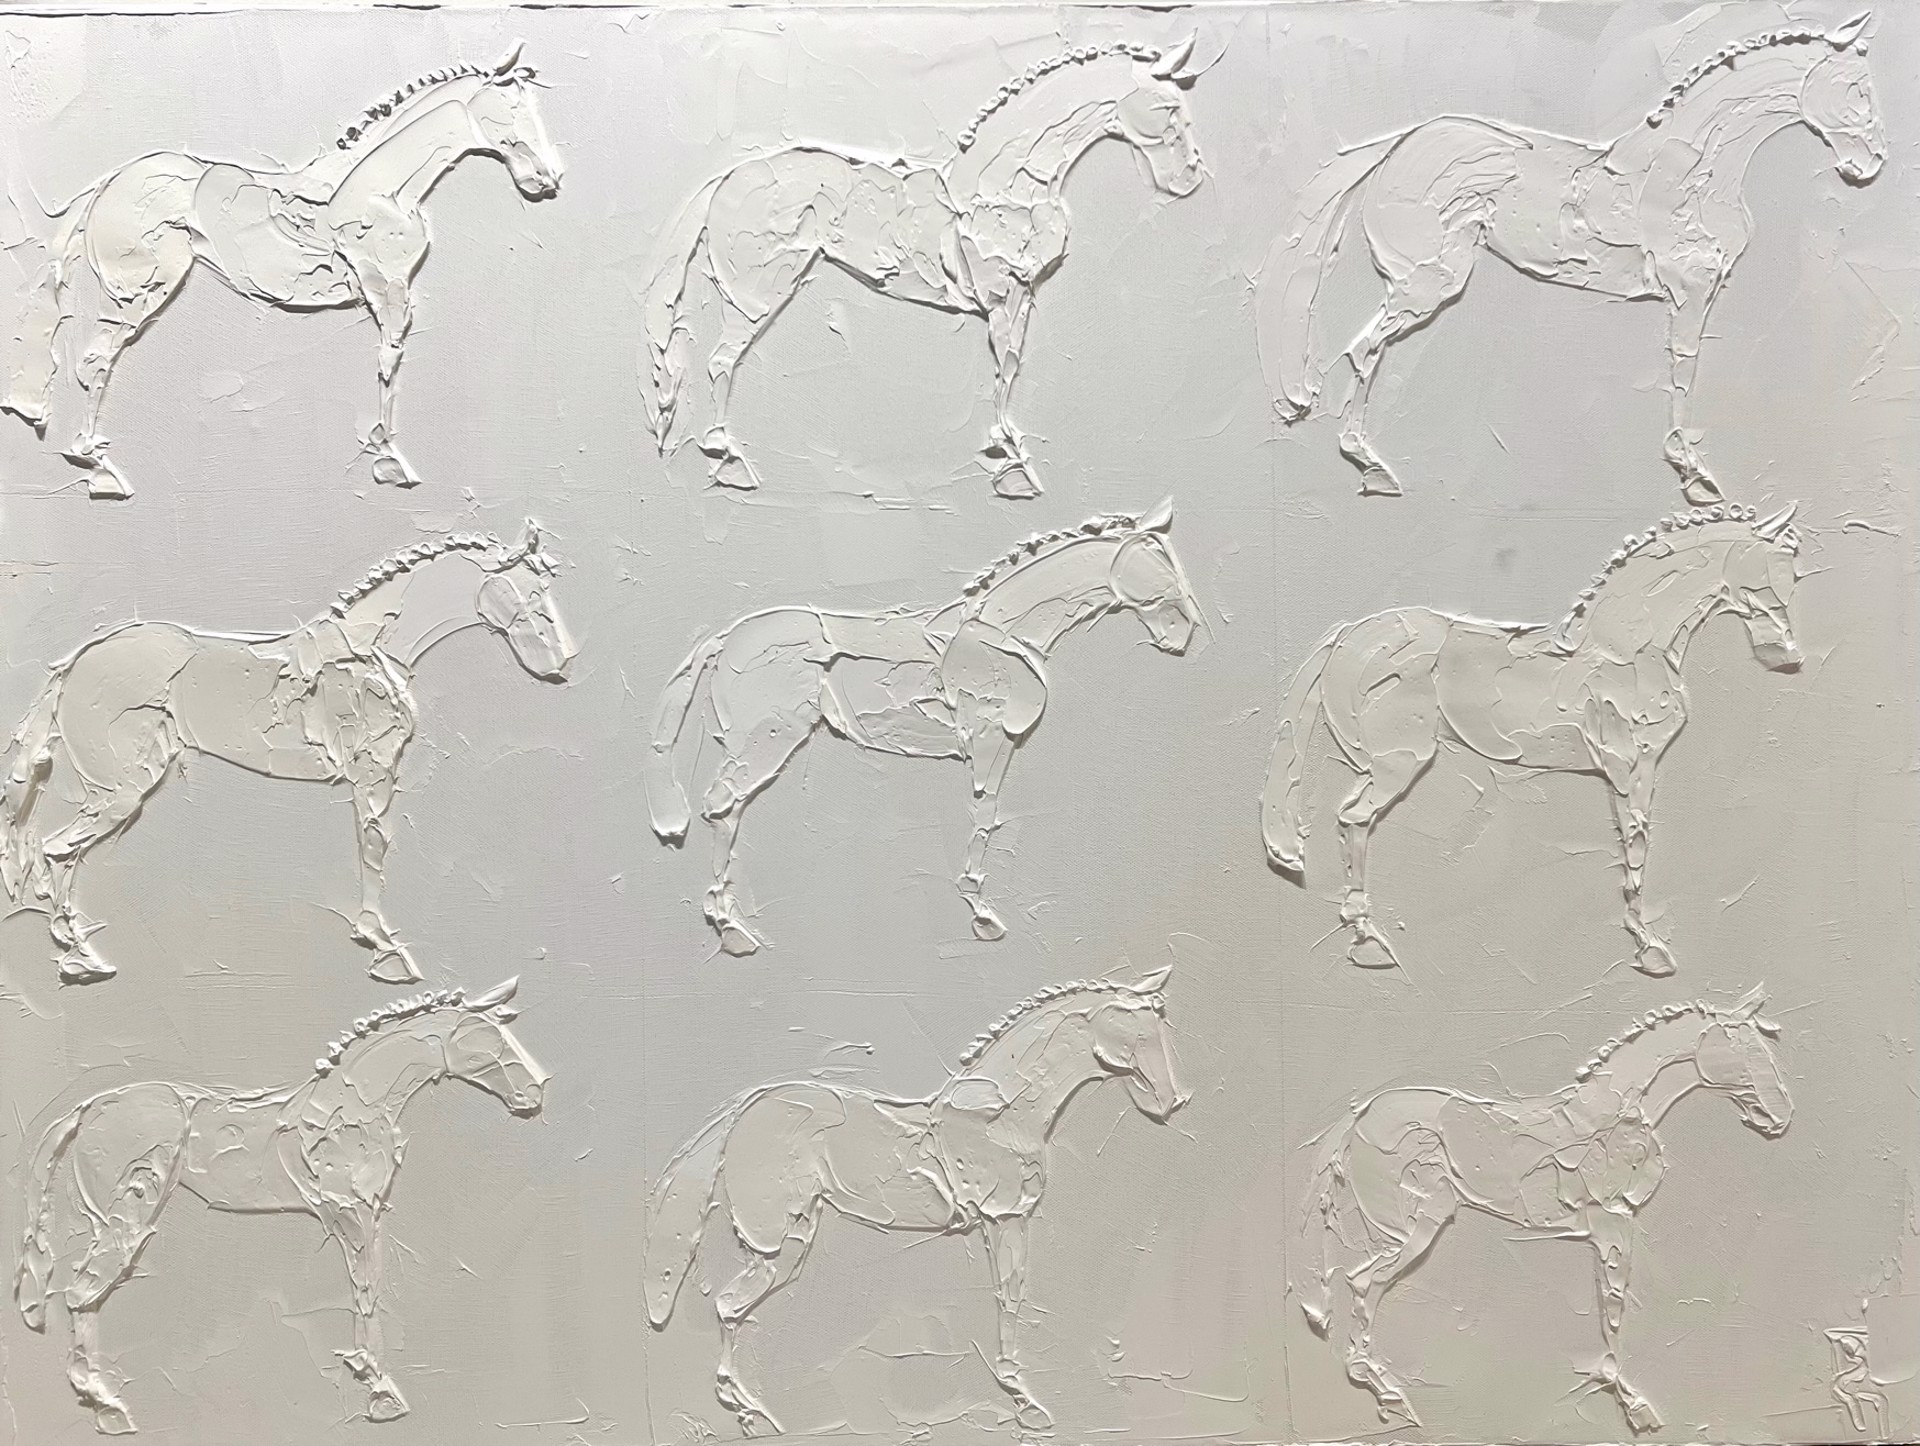 Model Horses by Brooke Major